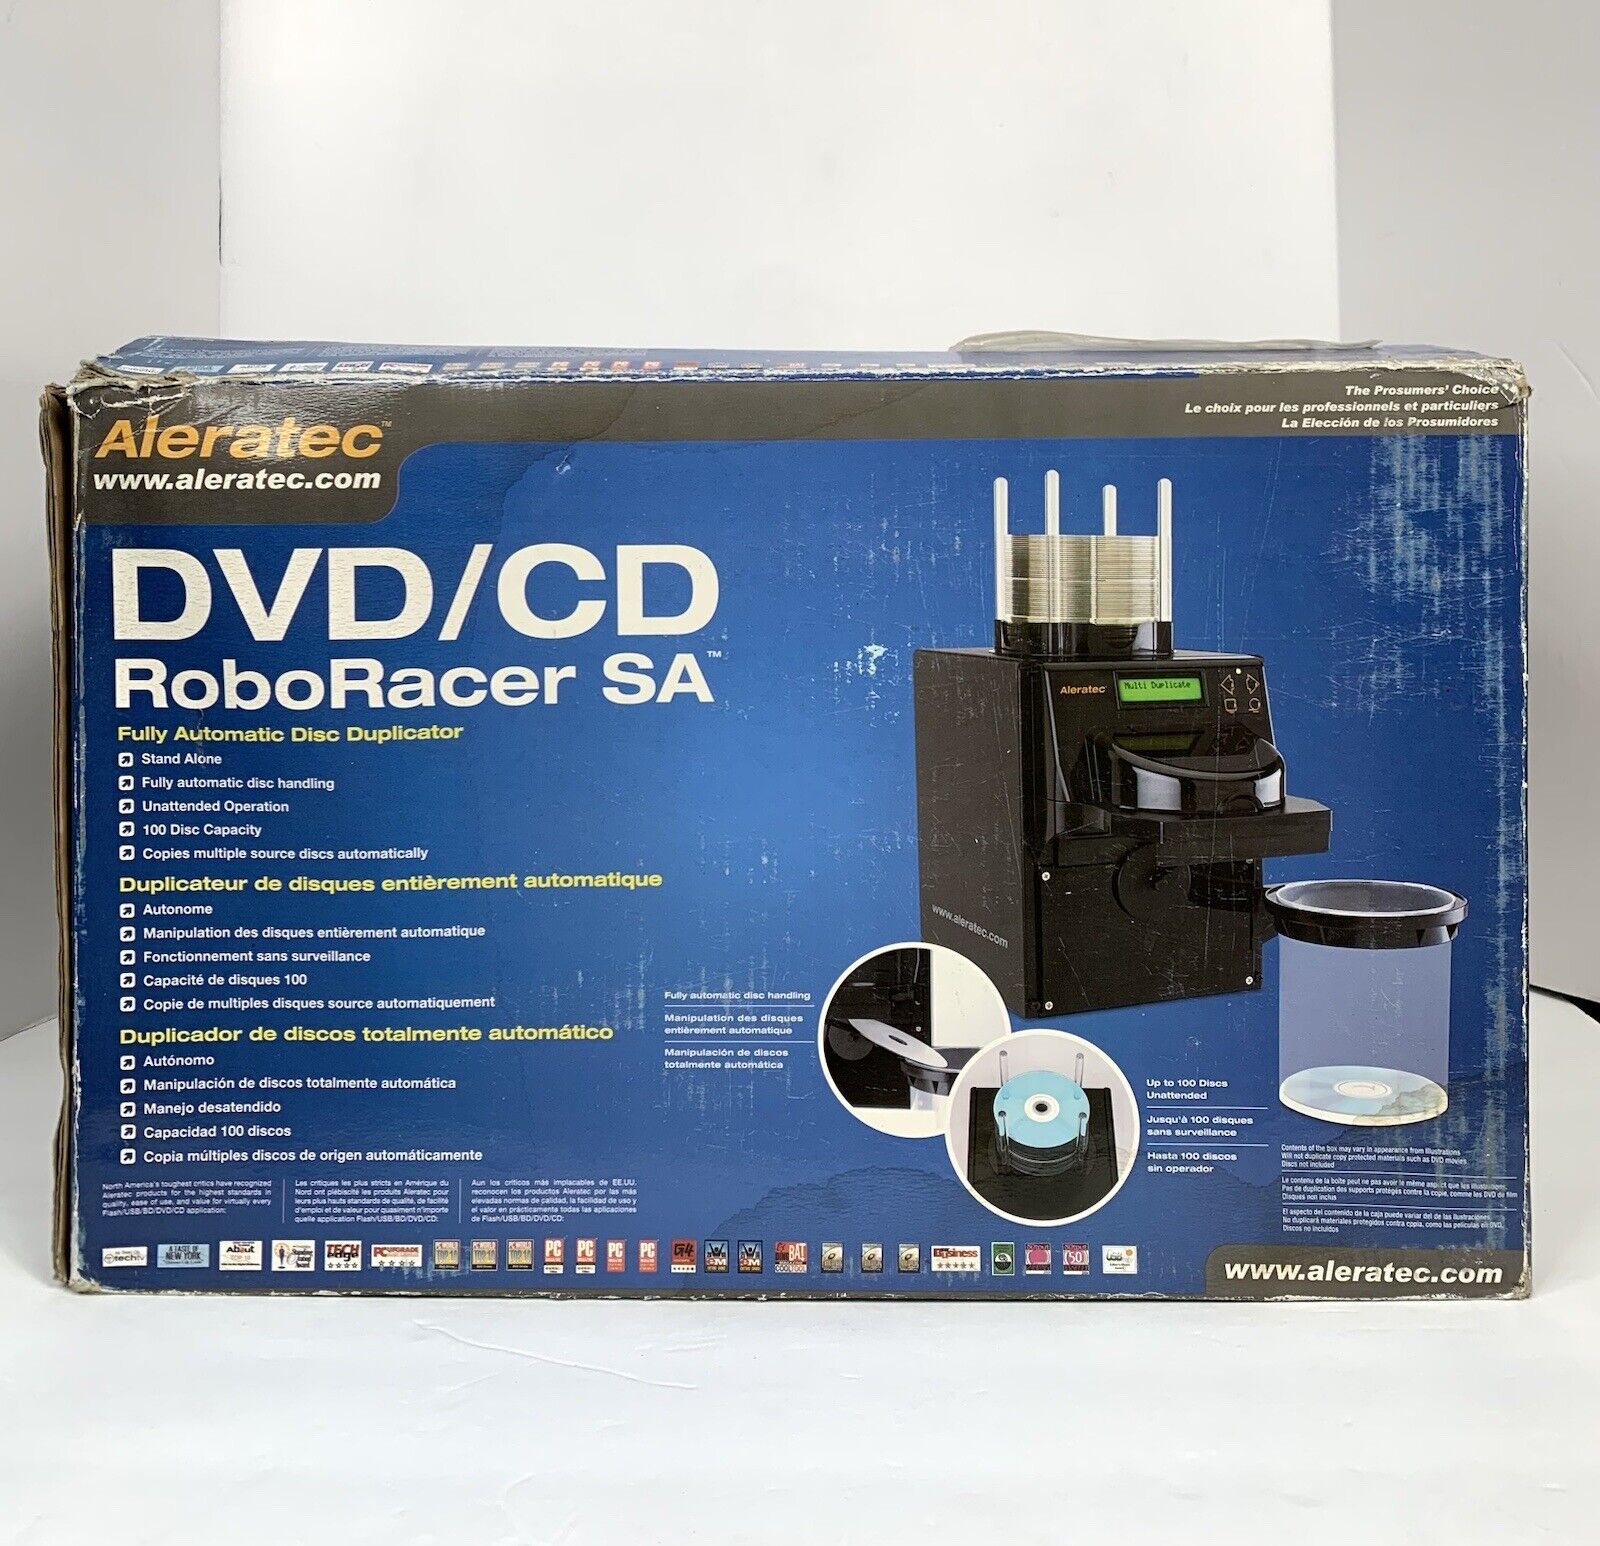 Aleratec Roboracer SA DVD RW (R DL) DVD-RAM 100 Disc Copy Duplicator